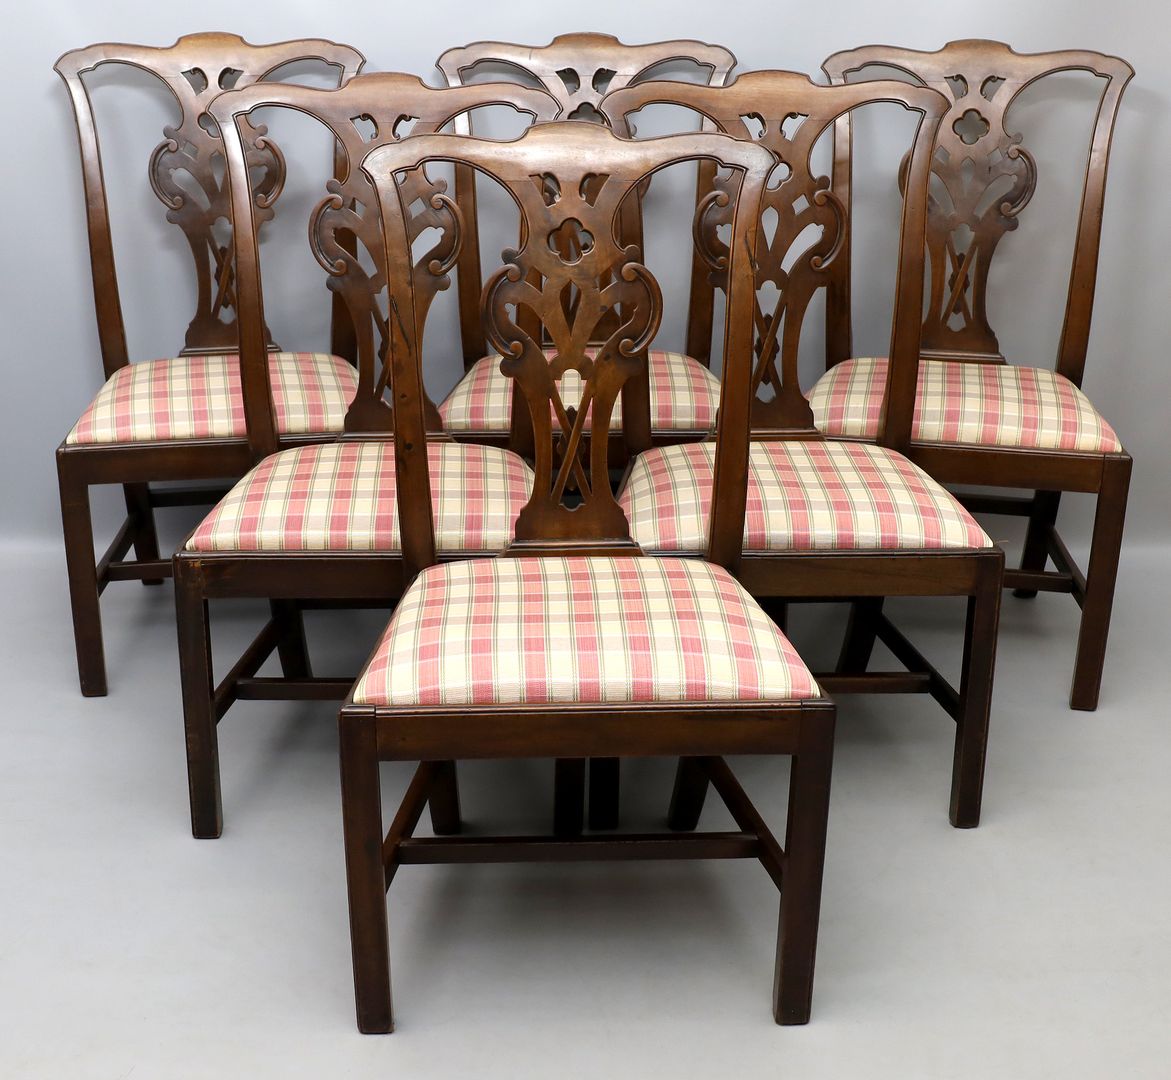 6 Stühle im Chippendale-Stil.